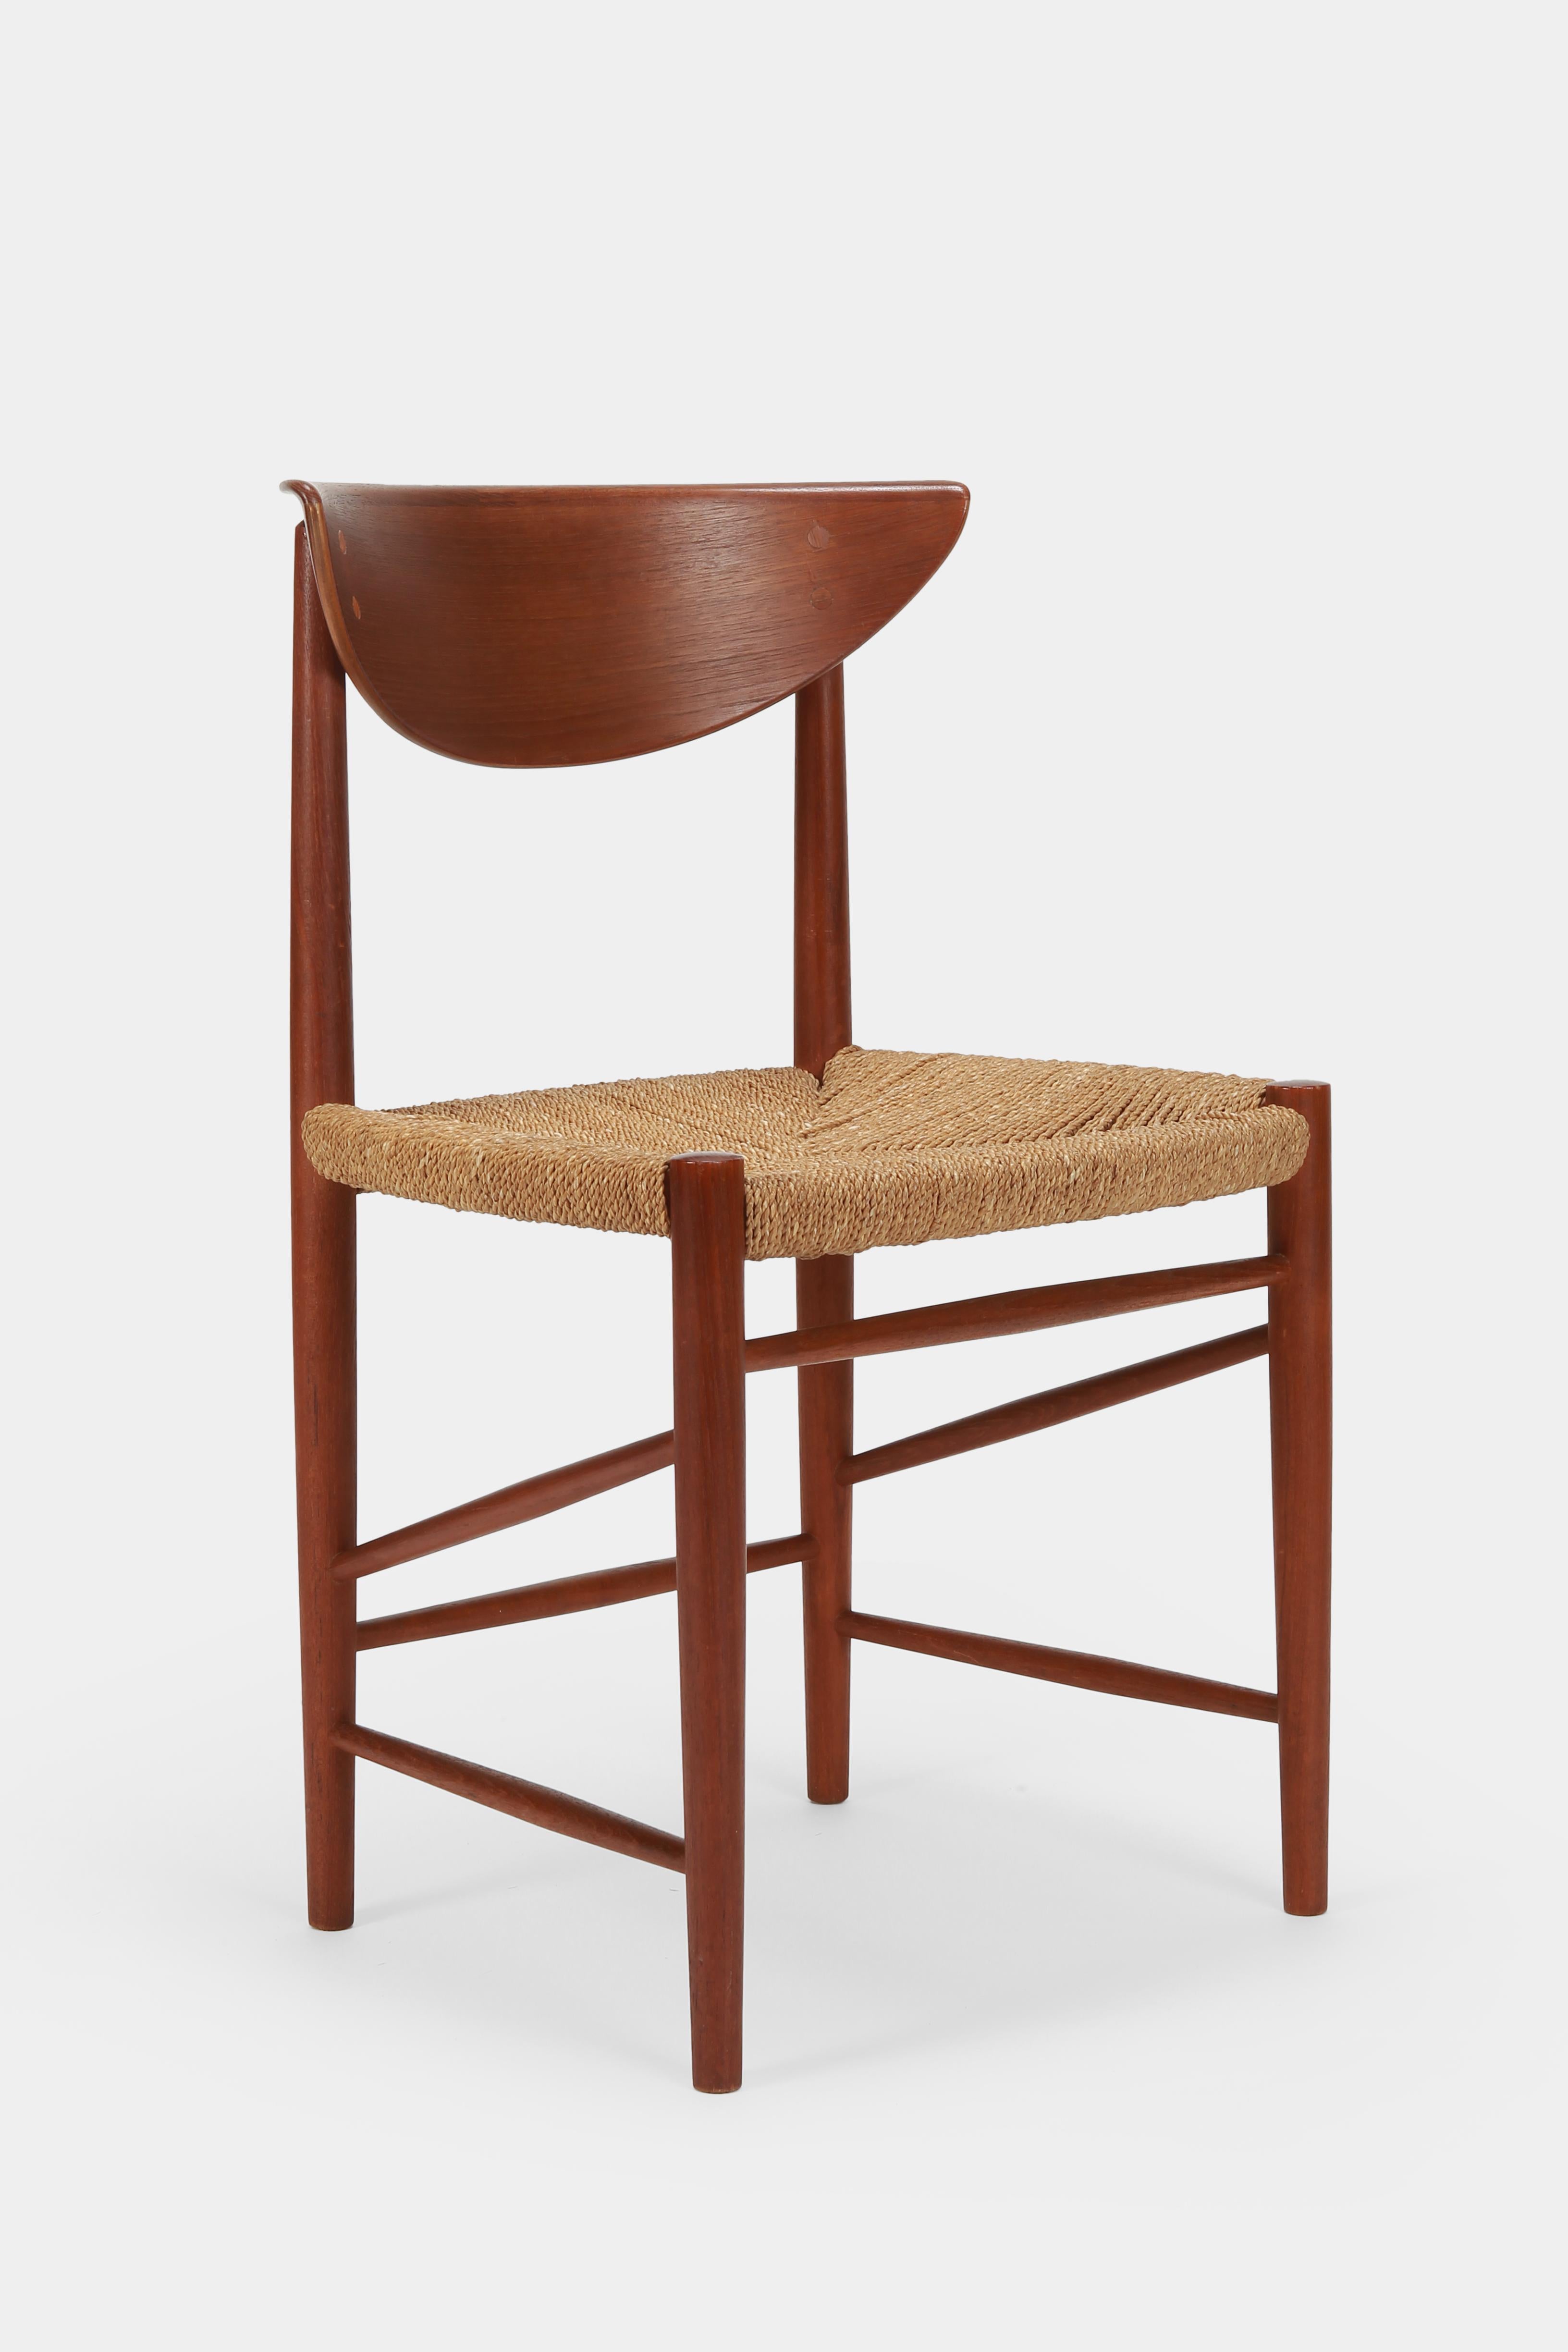 Cord Hvidt & Mølgaard Single Chair Teak, 1950s For Sale